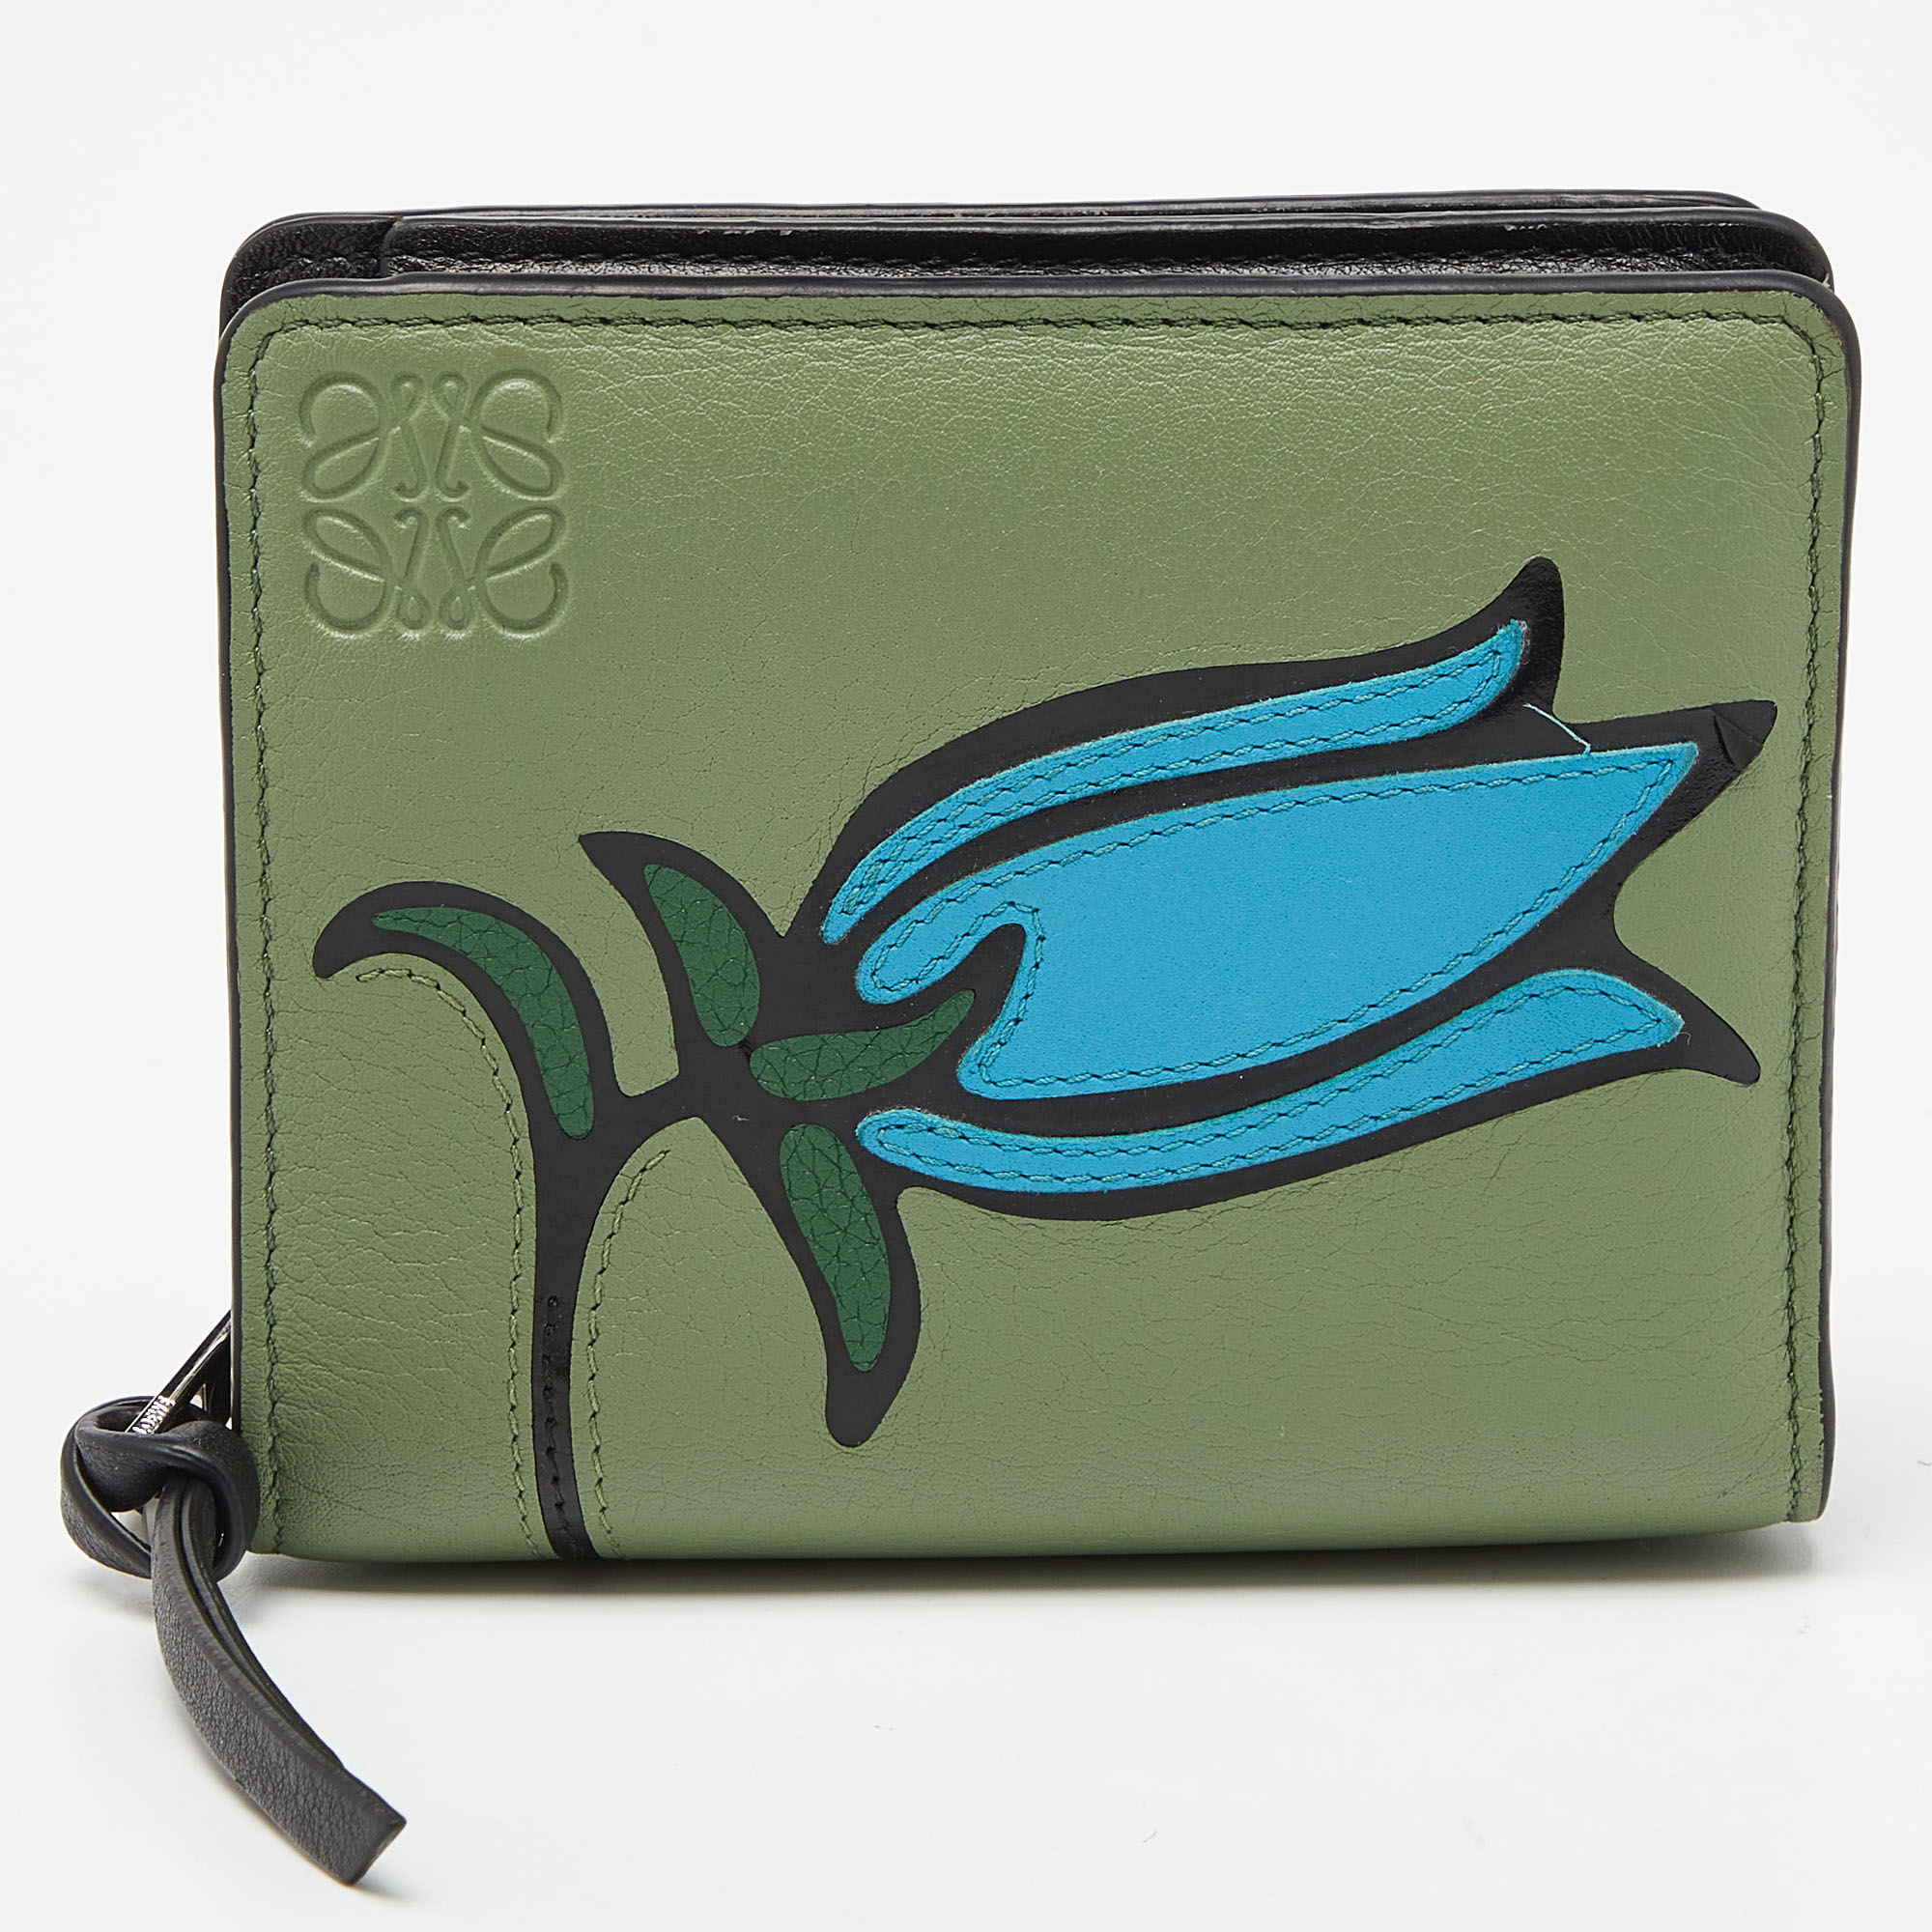 

Loewe Green/Blue Leather Zip Compact Wallet